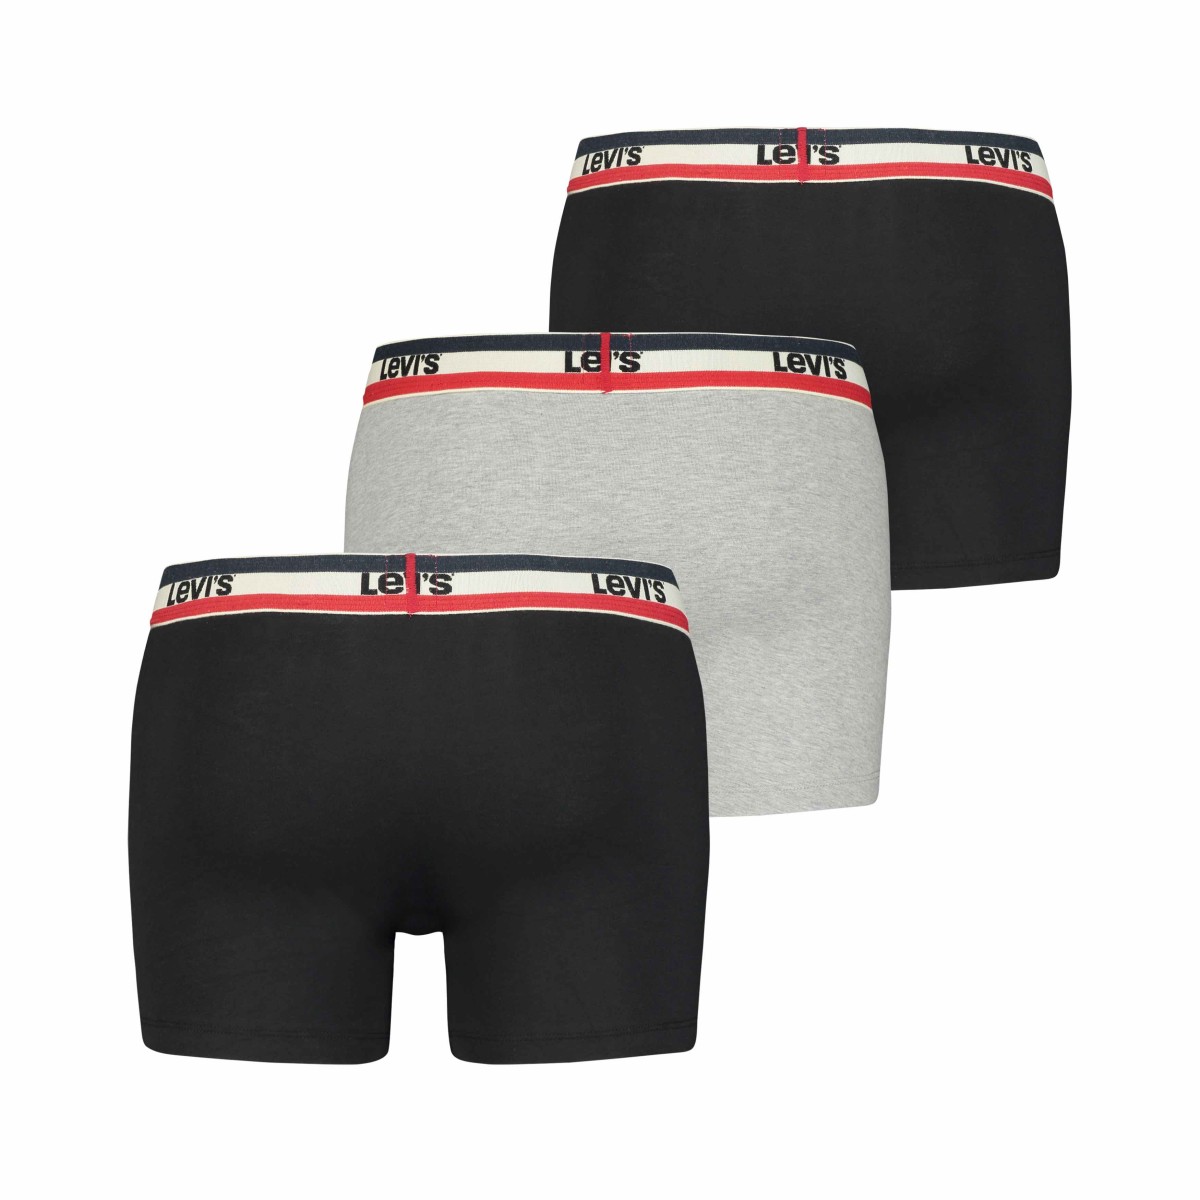 Lucky Brand Men's Underwear - Classic Knit Boxers (3 Pack), Size Medium,  Charcoal/Black Print/Dark Green